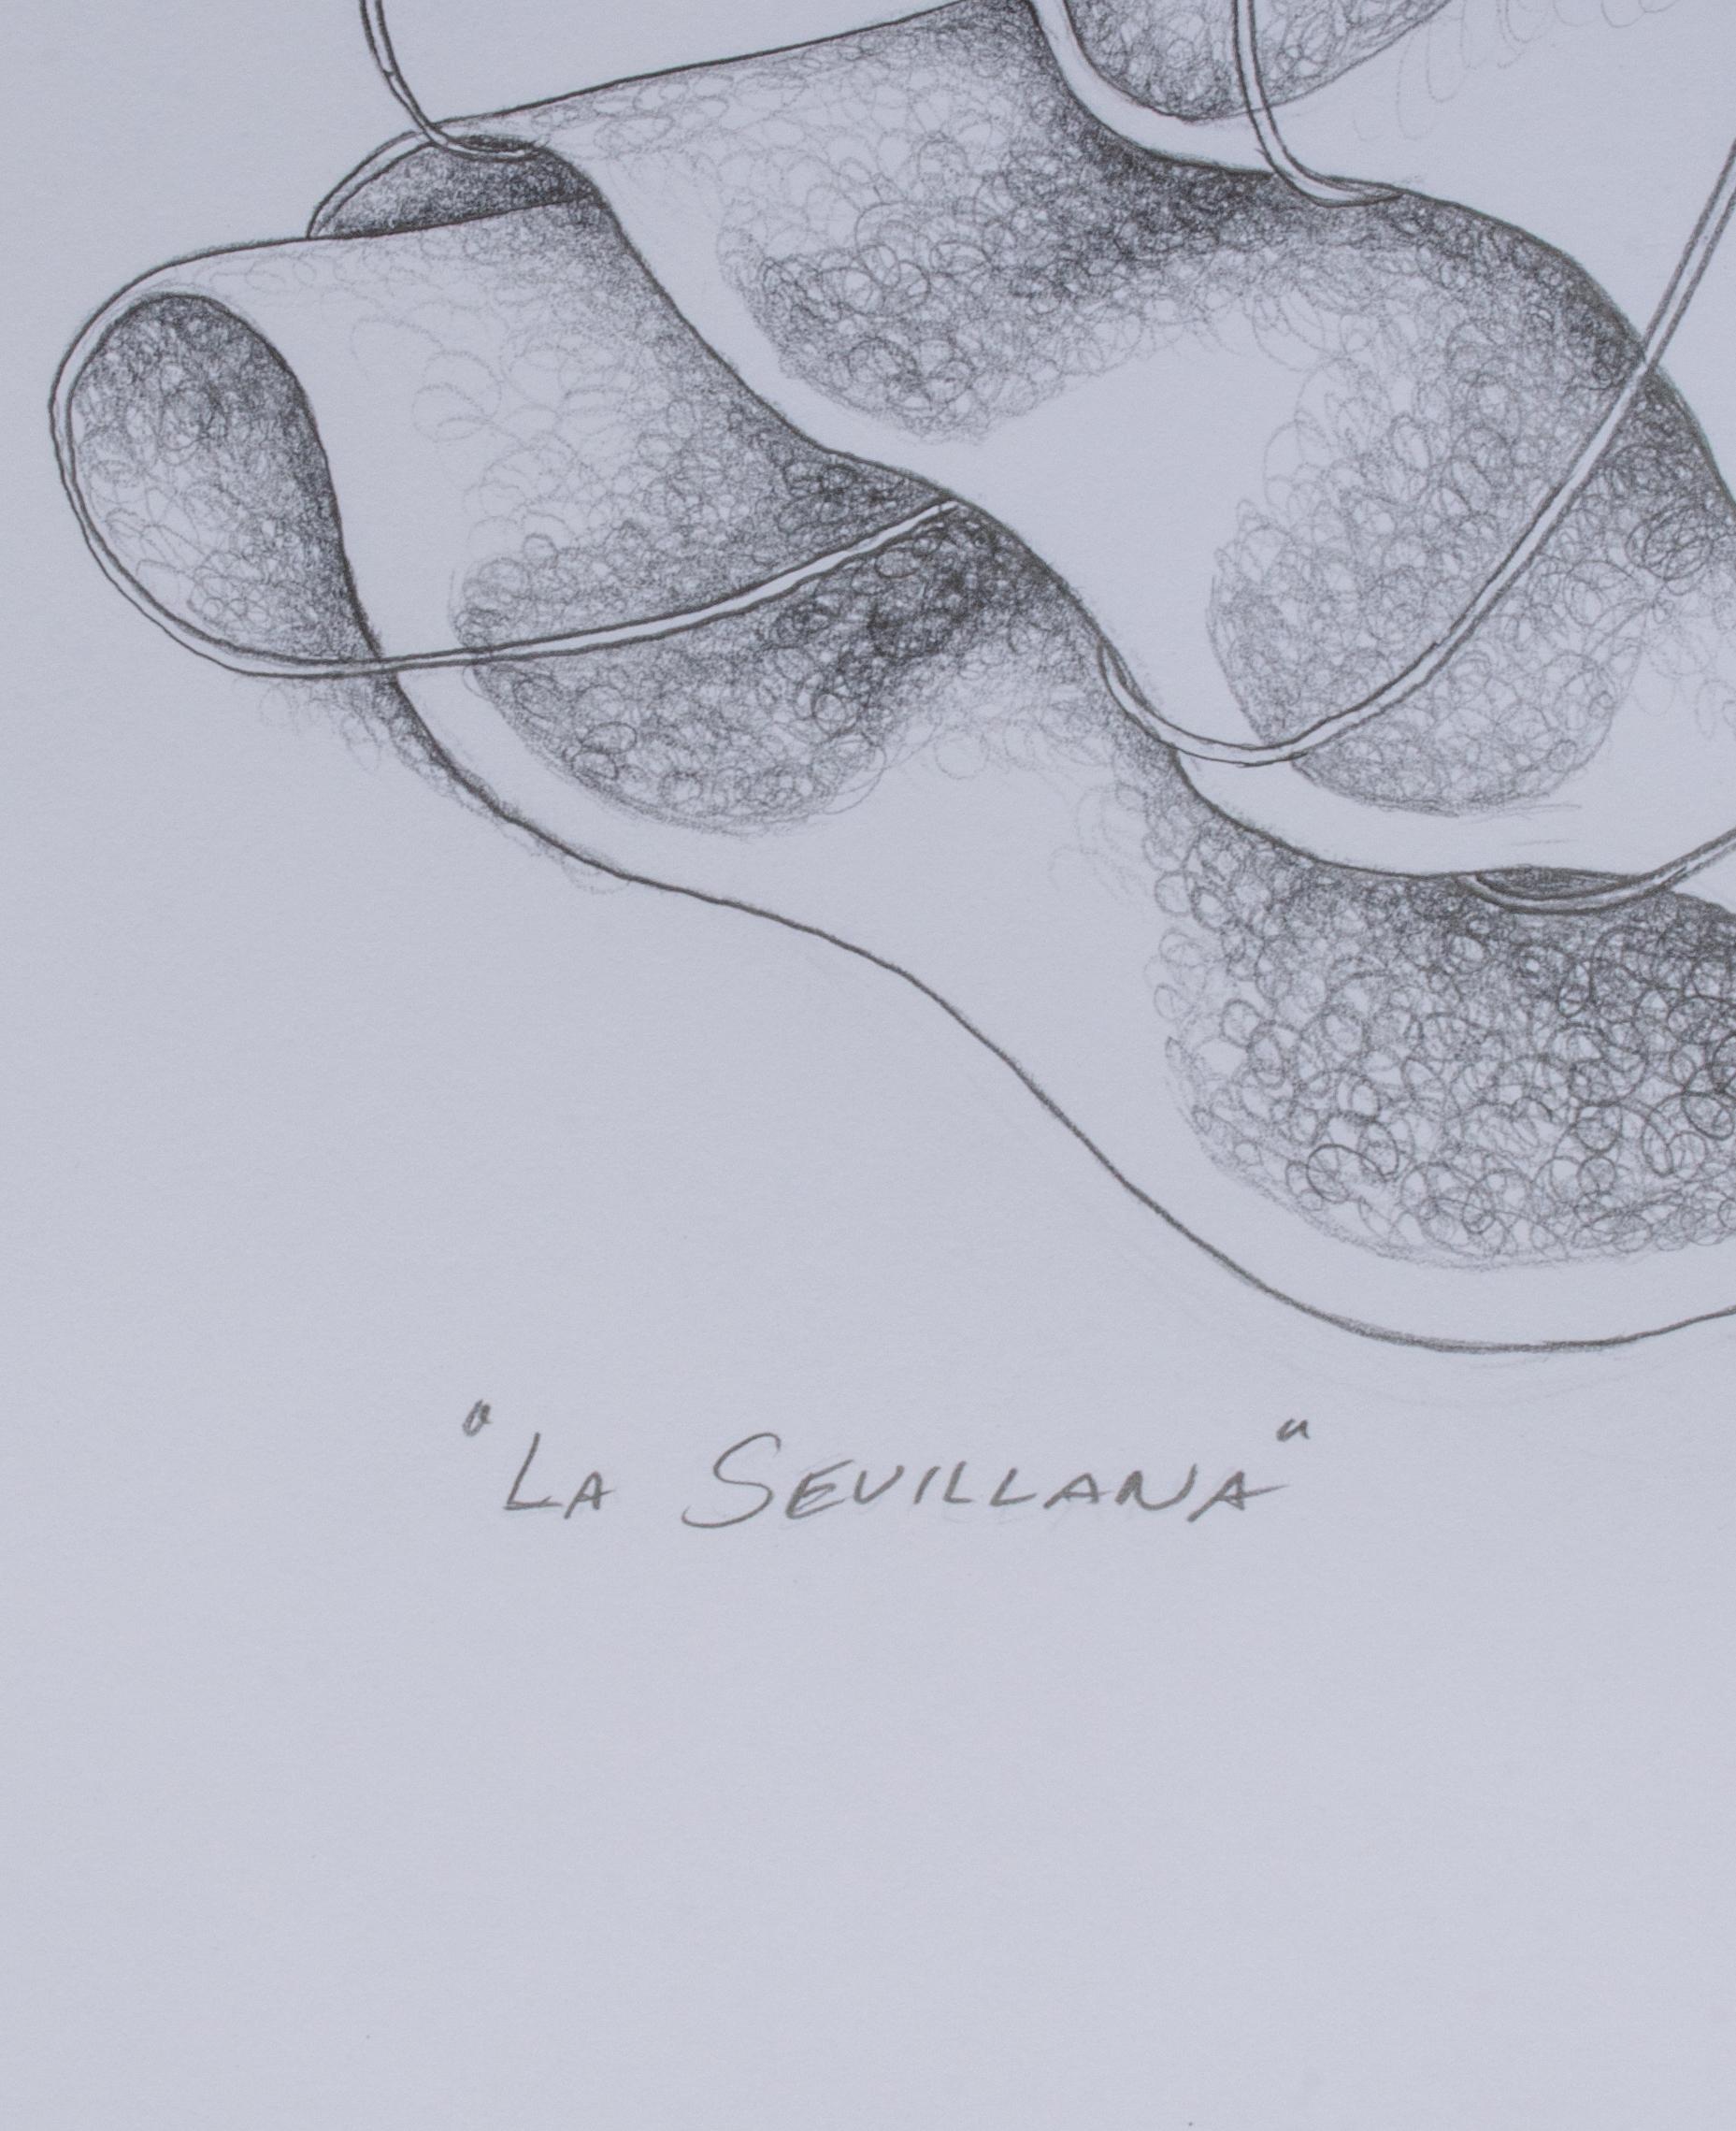 SACHA (American, b. 1965)
La Sevillana, 2004
Pencil on paper
20 x 16 in.
Signed lower right: Sacha '04
Inscribed lower left: 